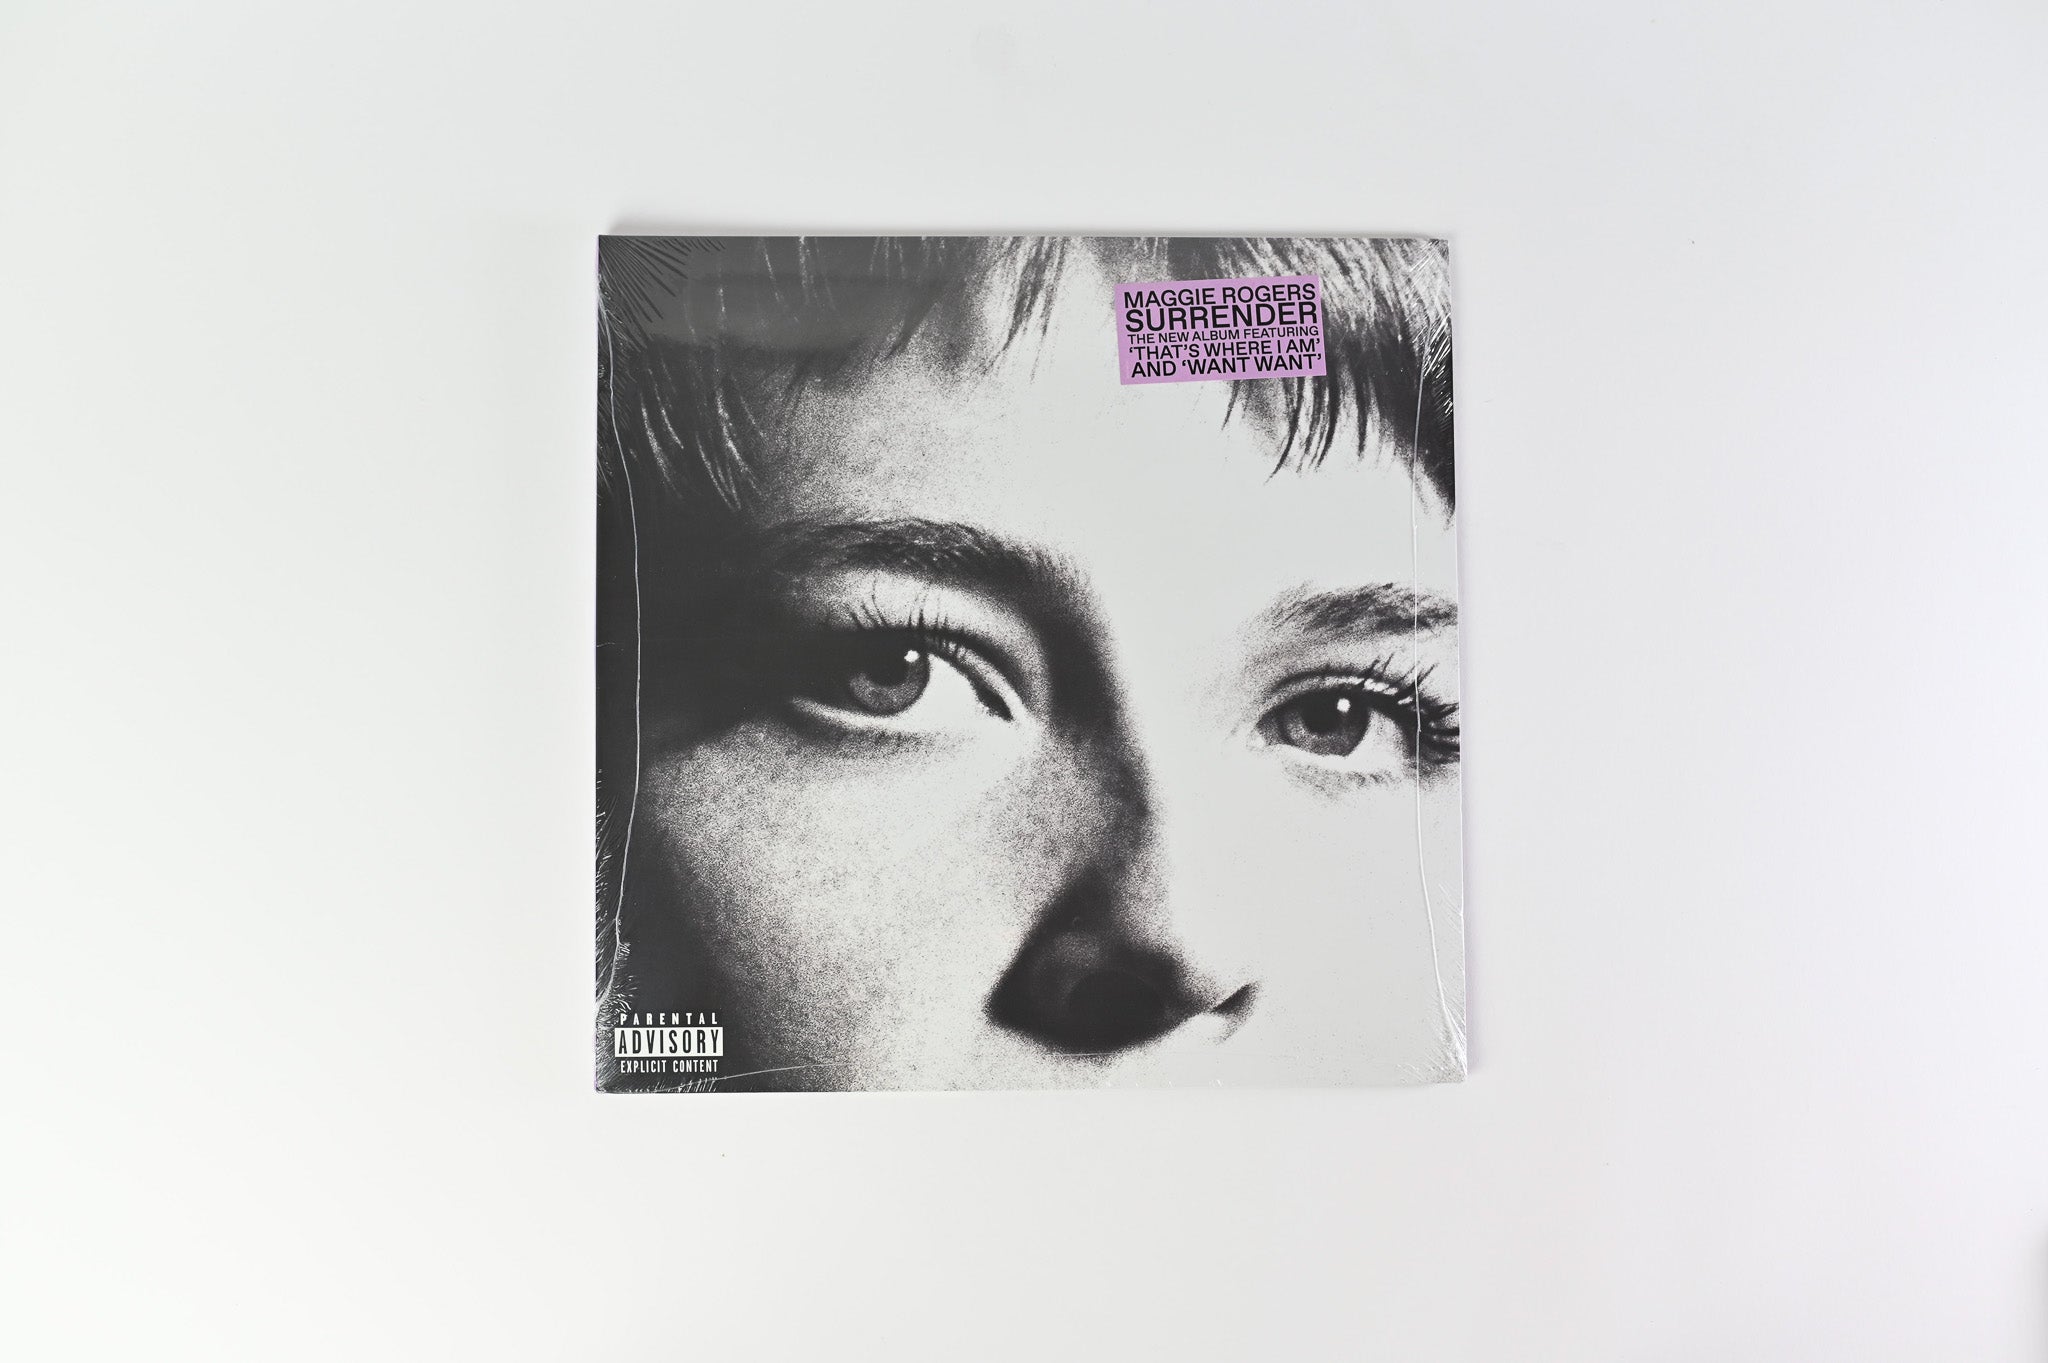 Maggie Rogers - Surrender on Capitol Ltd Purple Vinyl Sealed